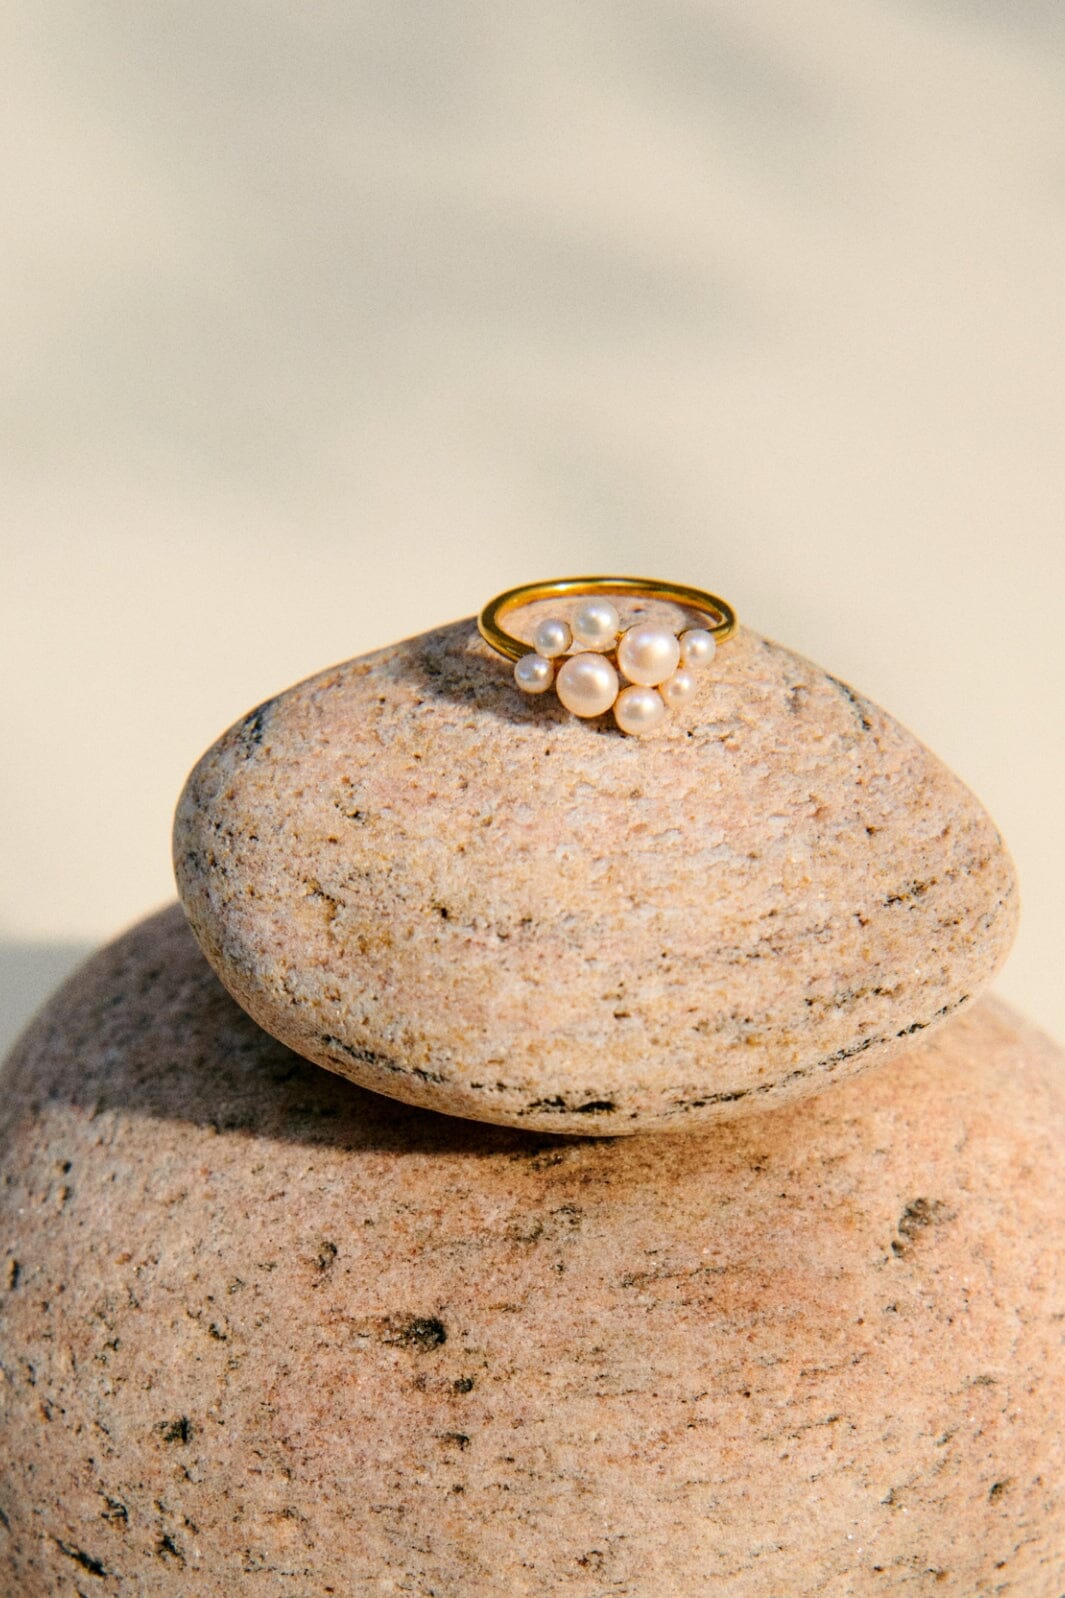 Pernille Corydon Jewellery - True Treasure Ring - Goldplated Ringe 